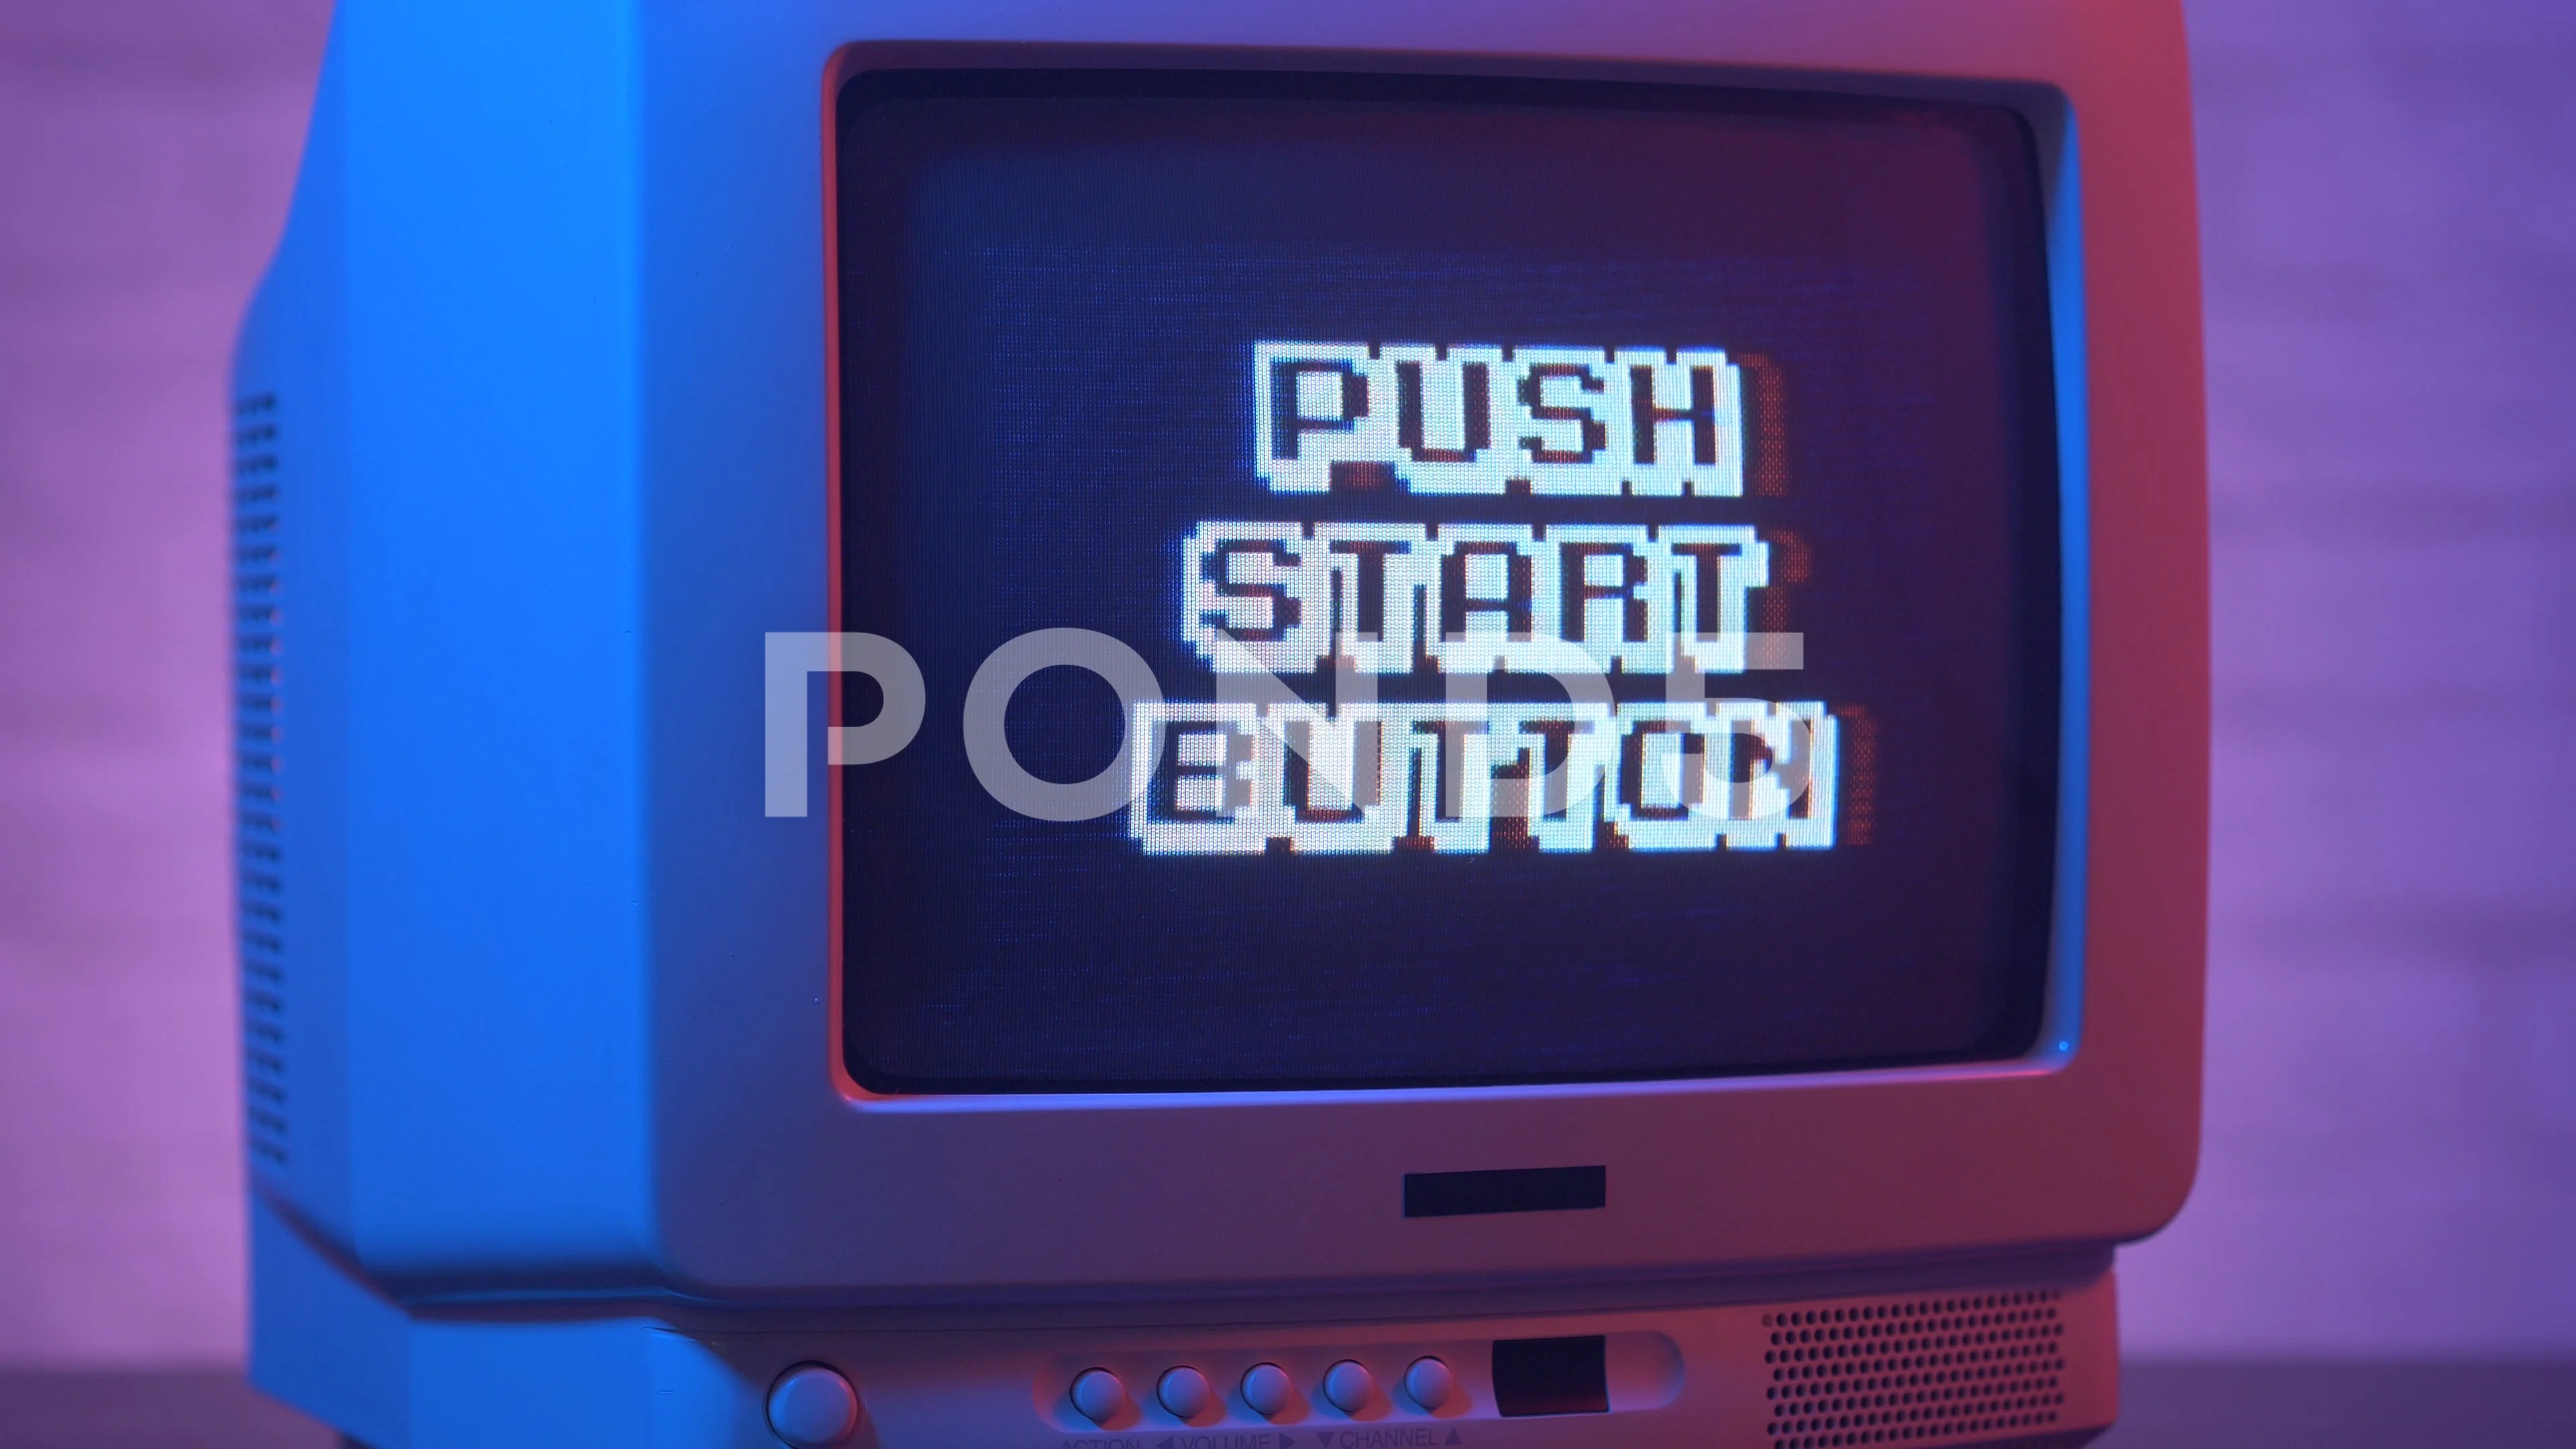 Press The Button Game - original sound